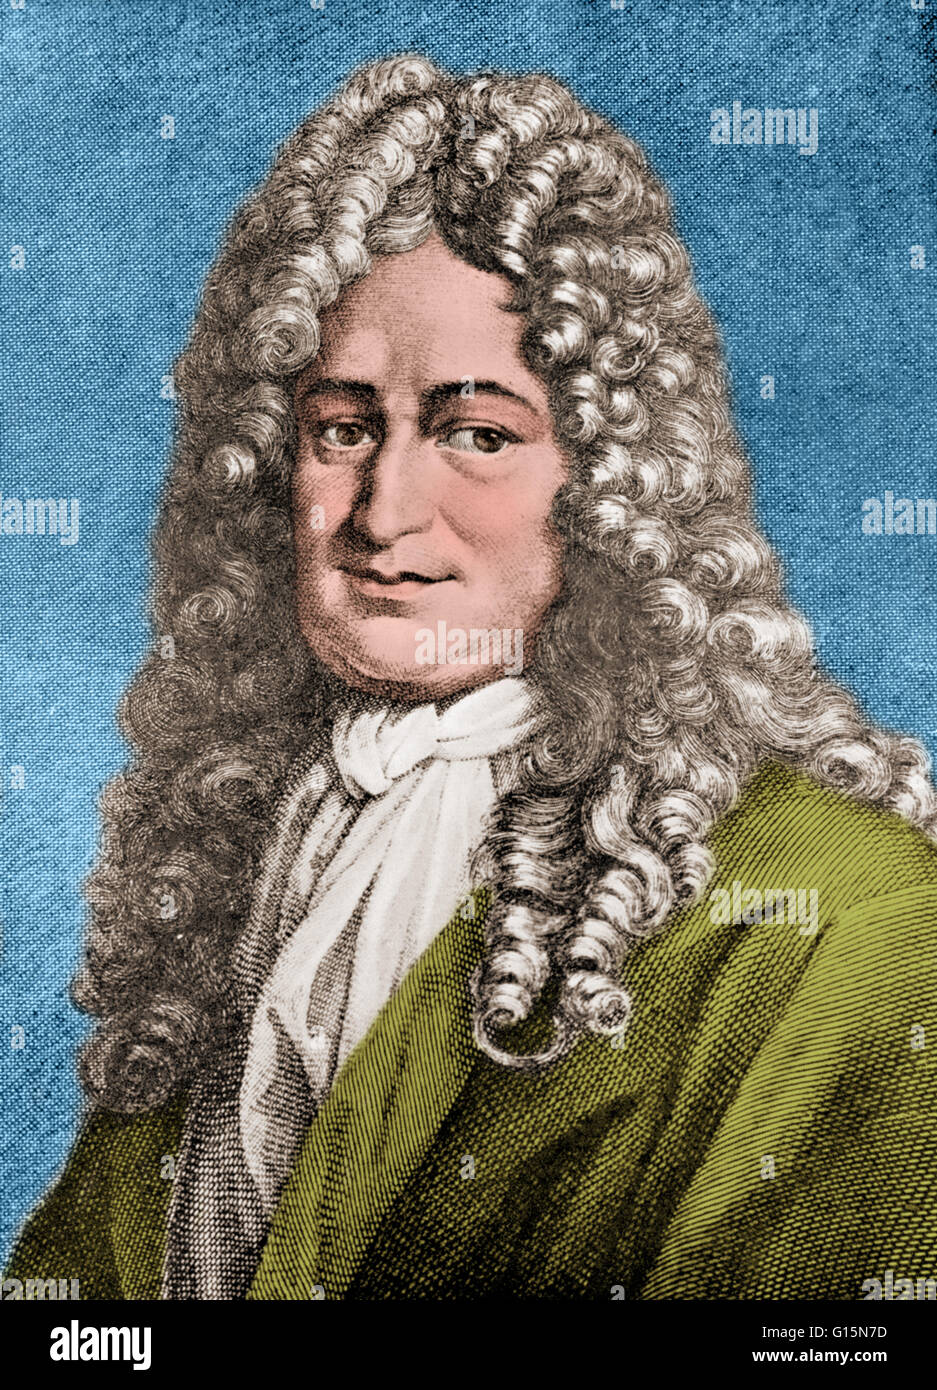 Gottfried Wilhelm Leibniz (von Leibniz) (July 1, 1646 - November 14, 1716) was a German mathematician and philosopher. Leibniz occupies a prominent place in the history of mathematics and the history of philosophy. His mathematical notation has been widel Stock Photo